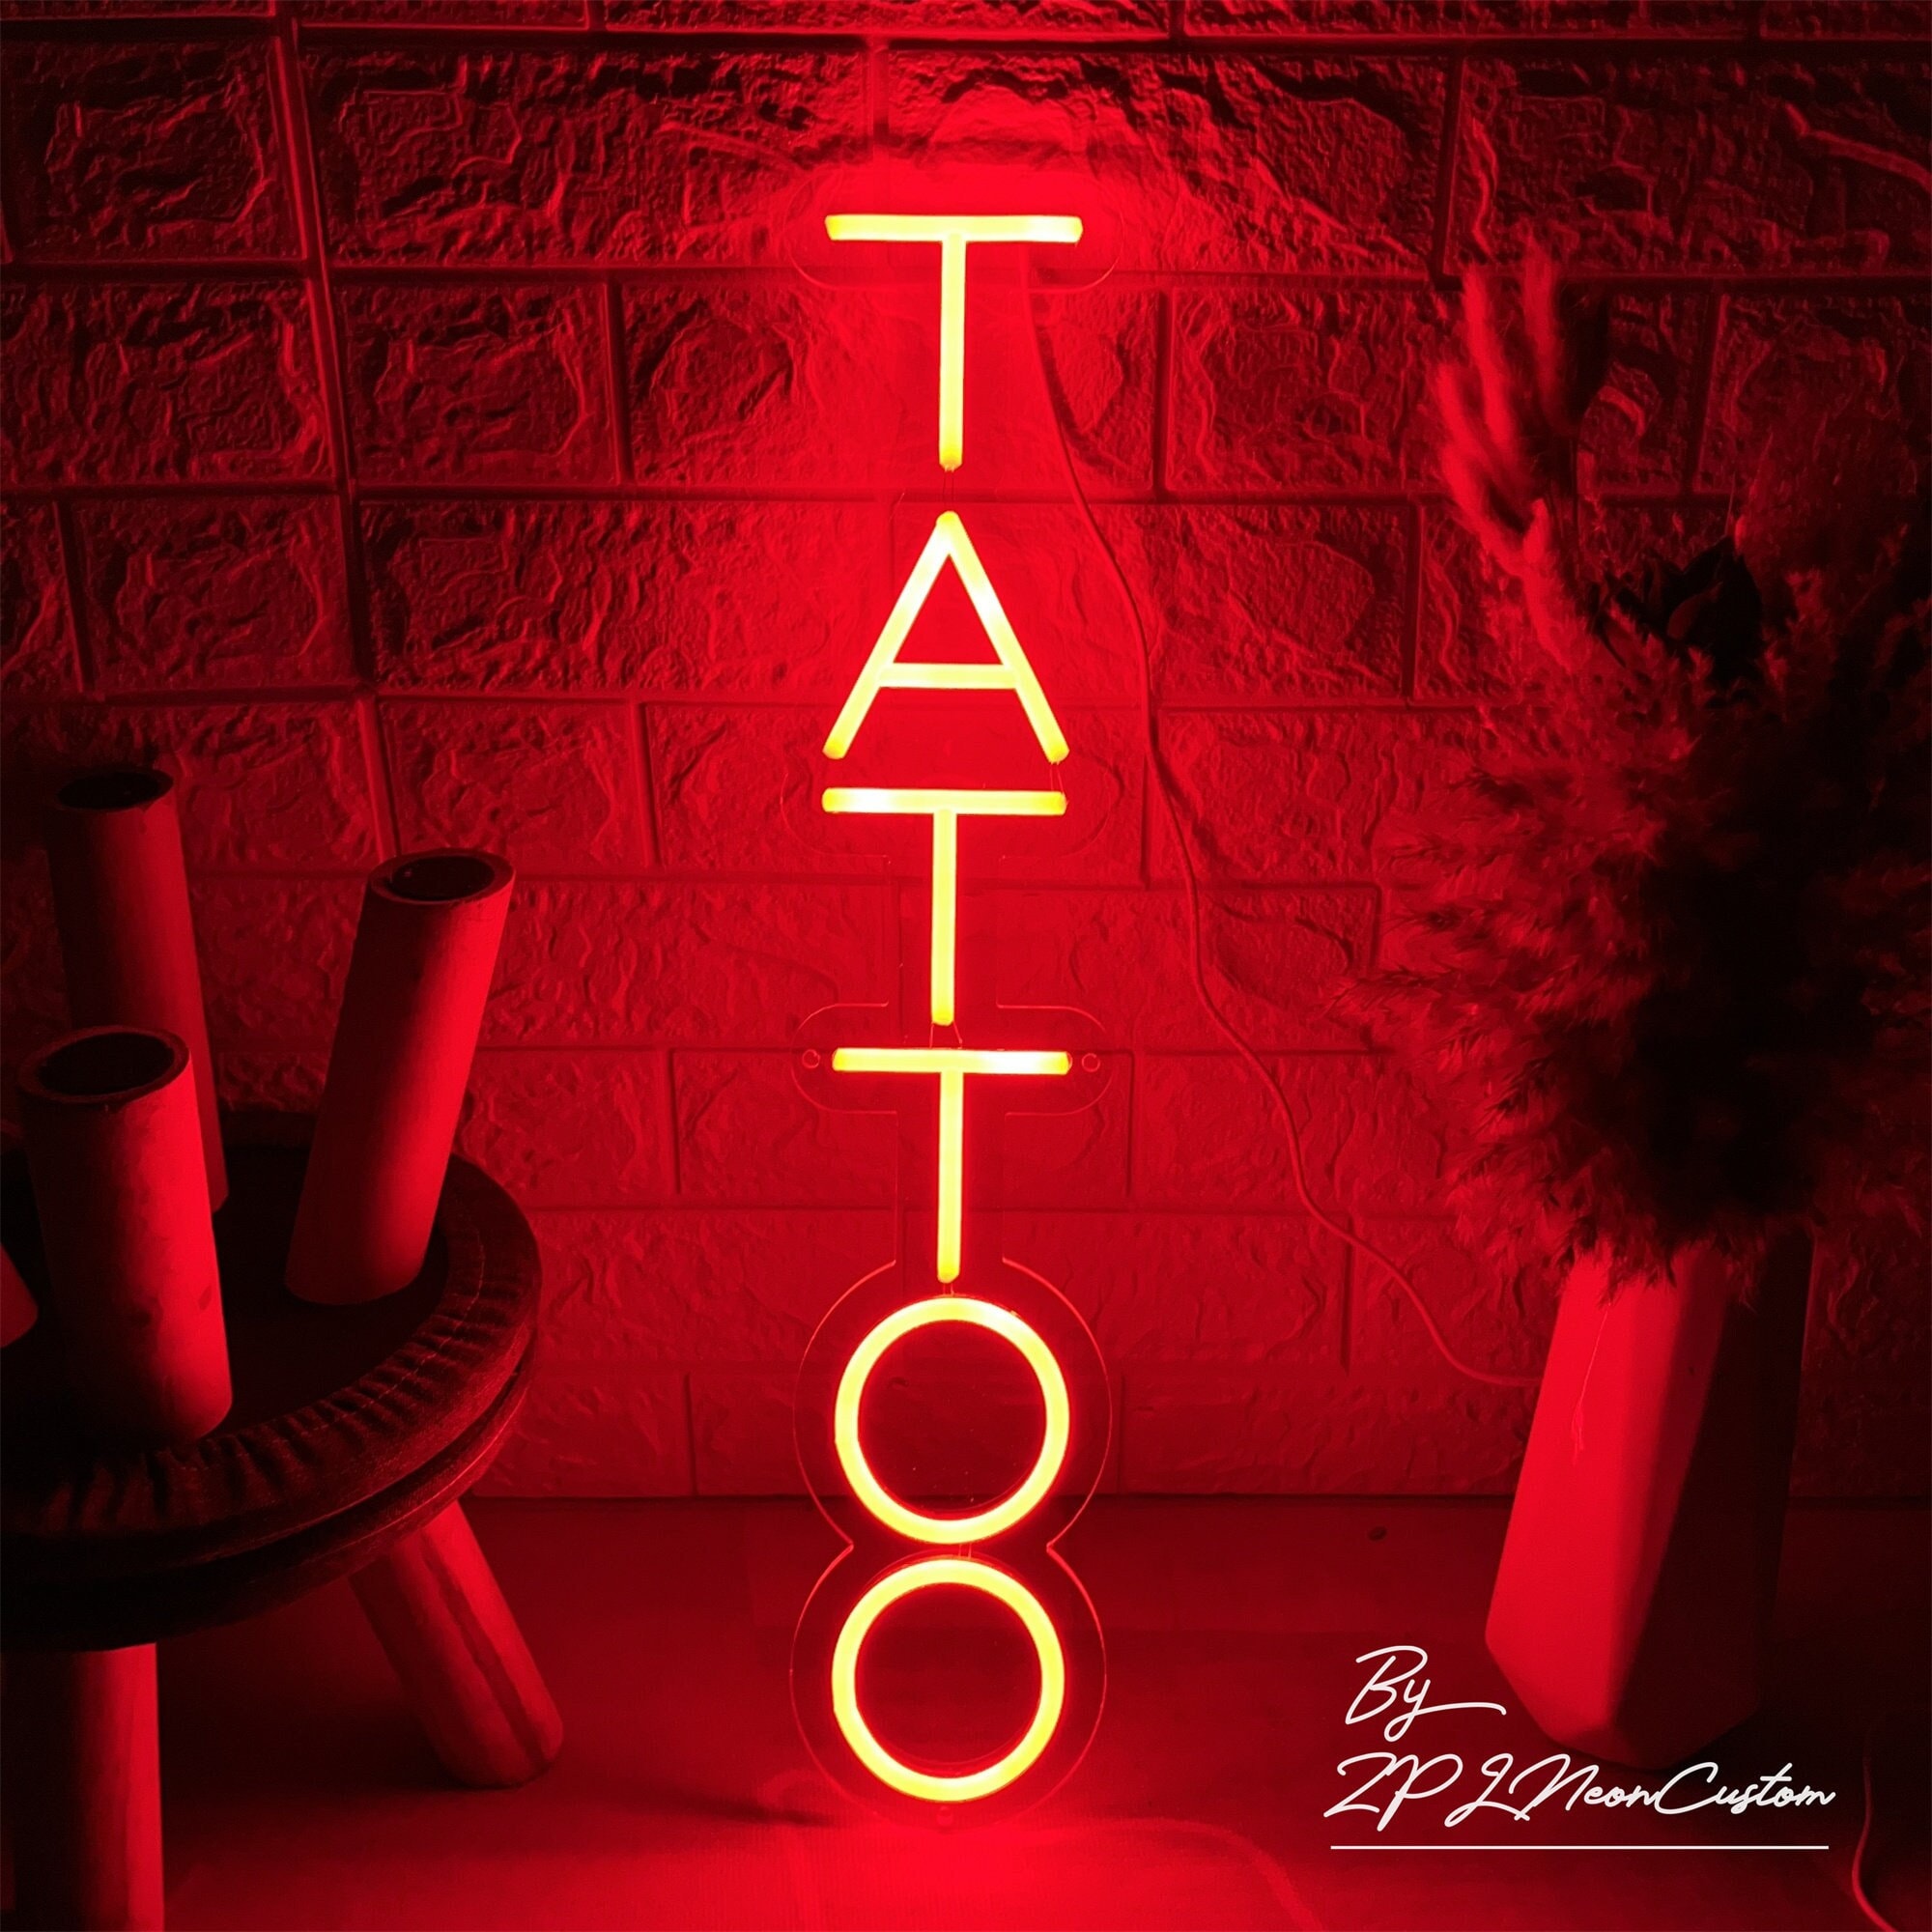 Tattoo Neon Sign Dimmable Tattoo Neon Light LED Neon Sign for Wall Decor Light Up Sign for Tattoo Salon Studio Shop Business Logo Bedroom Beer Bar